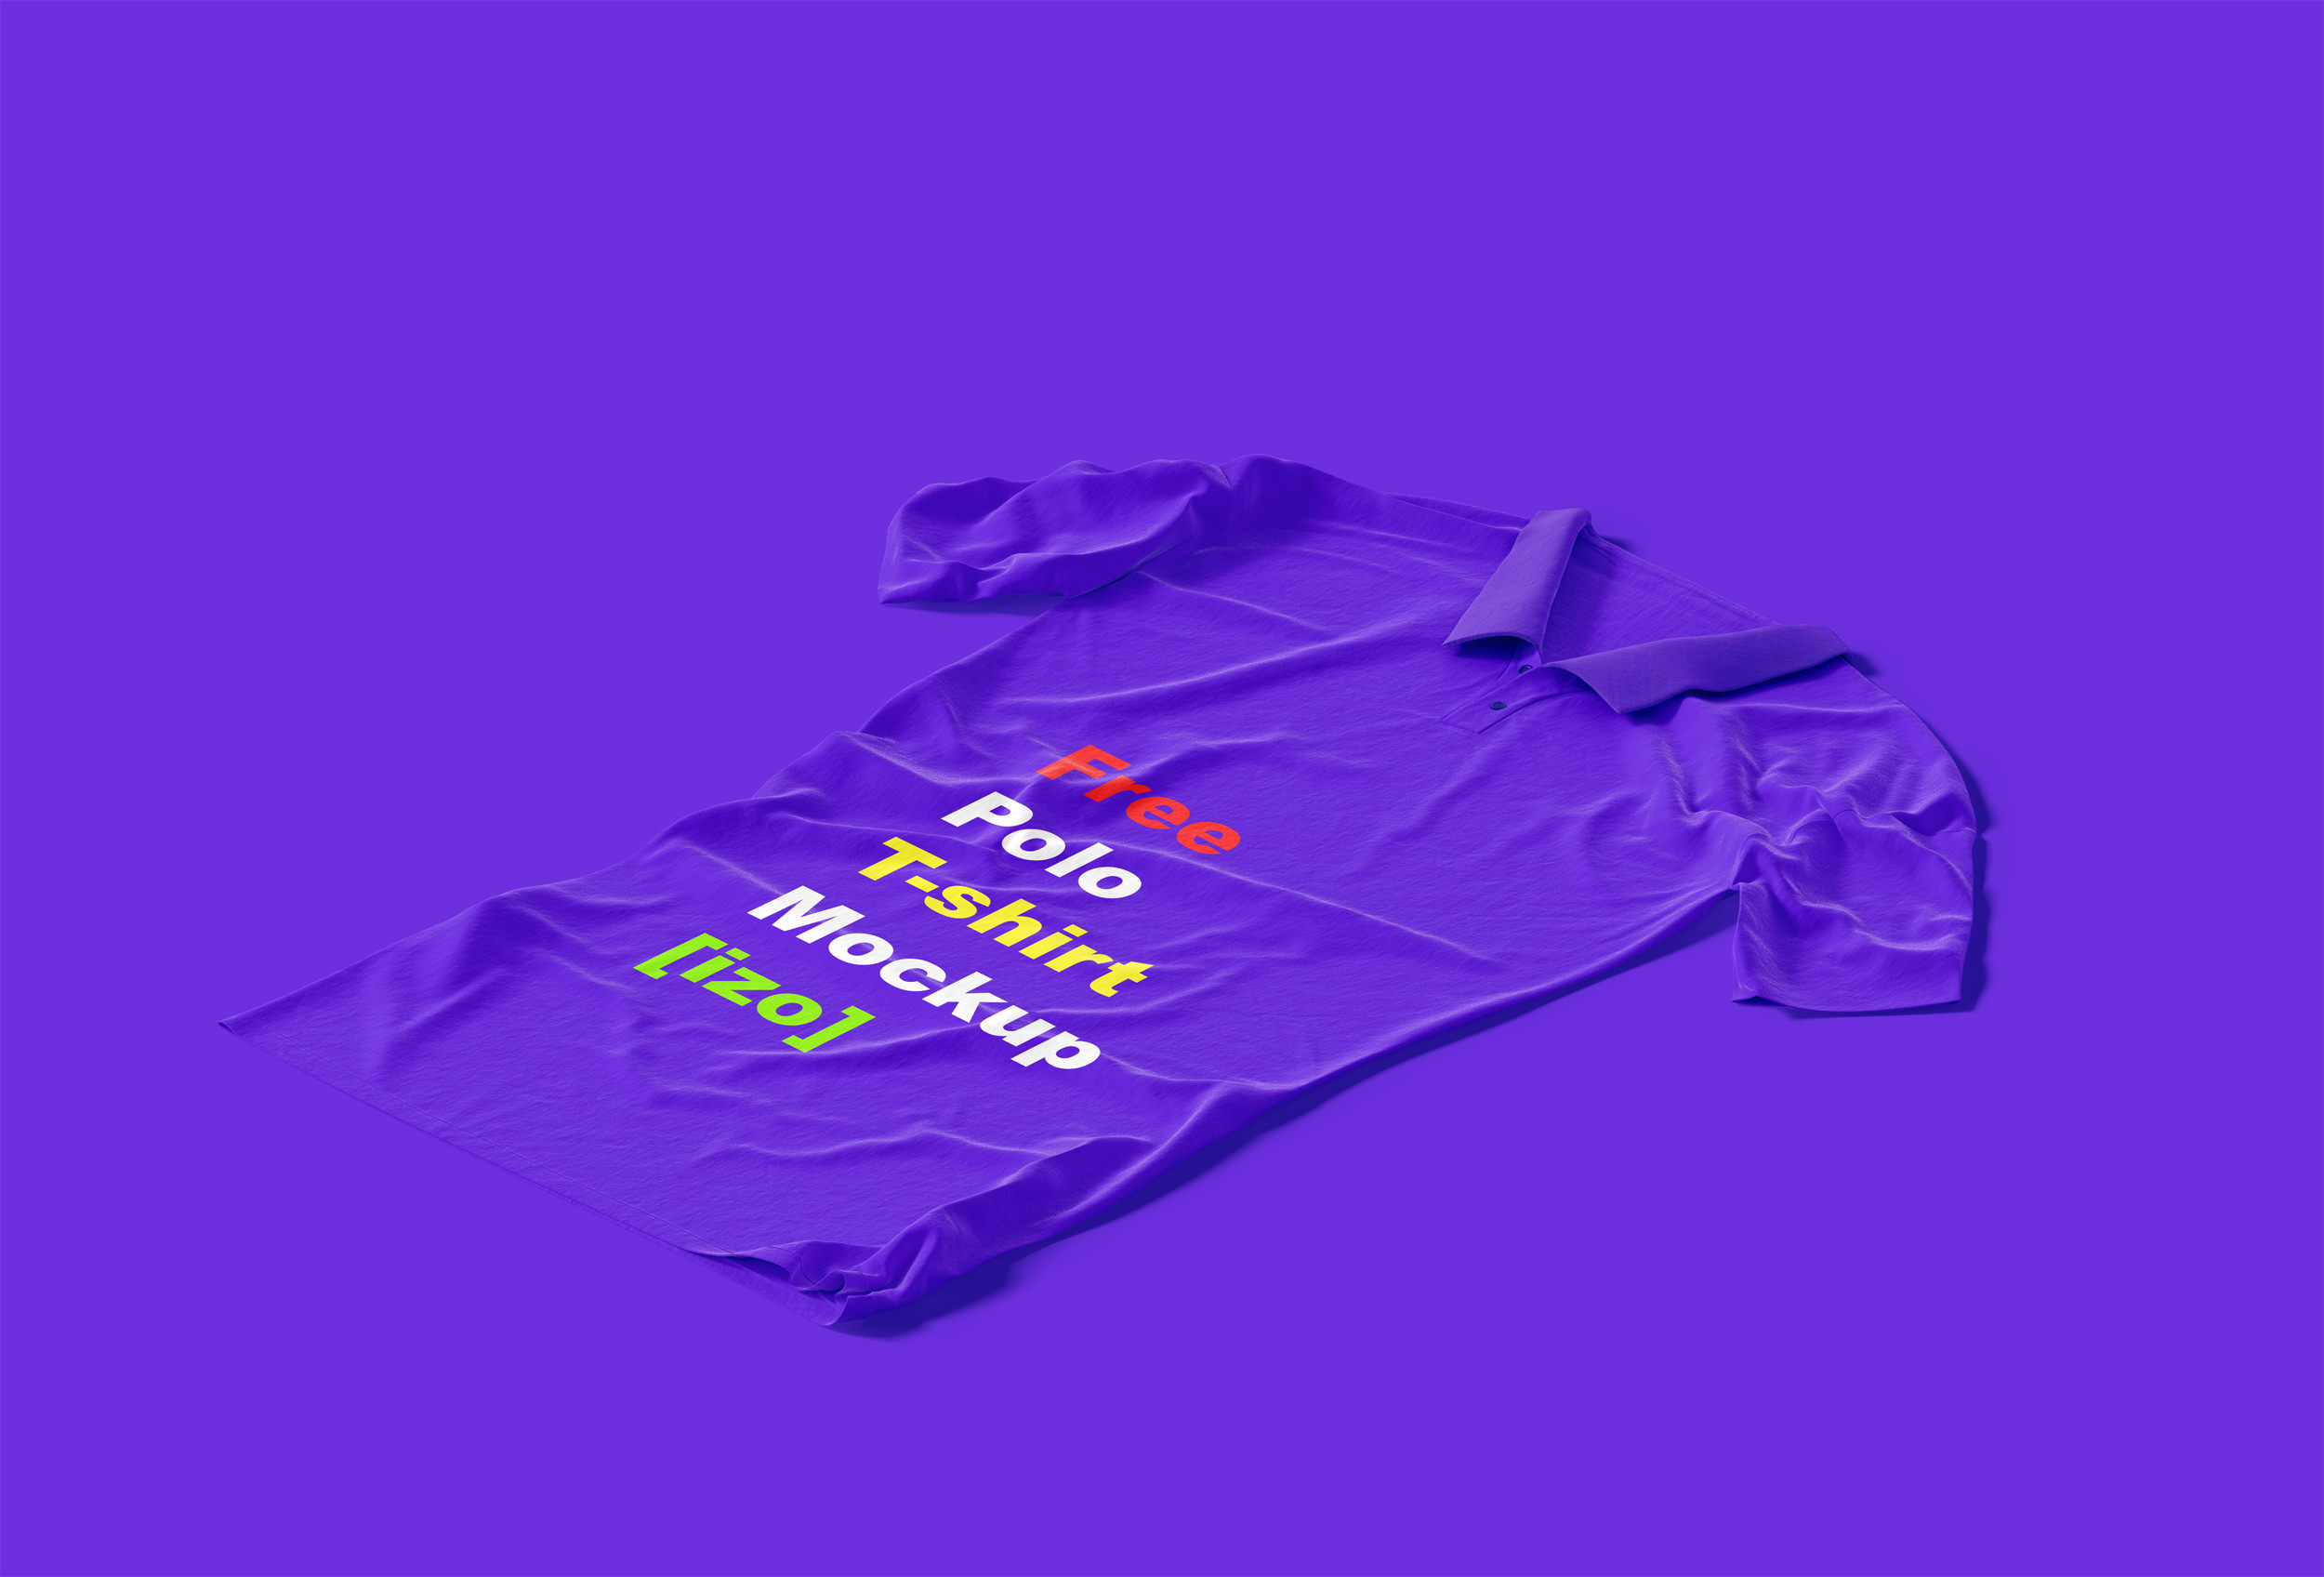 Polo T-shirt Mockup Free Download